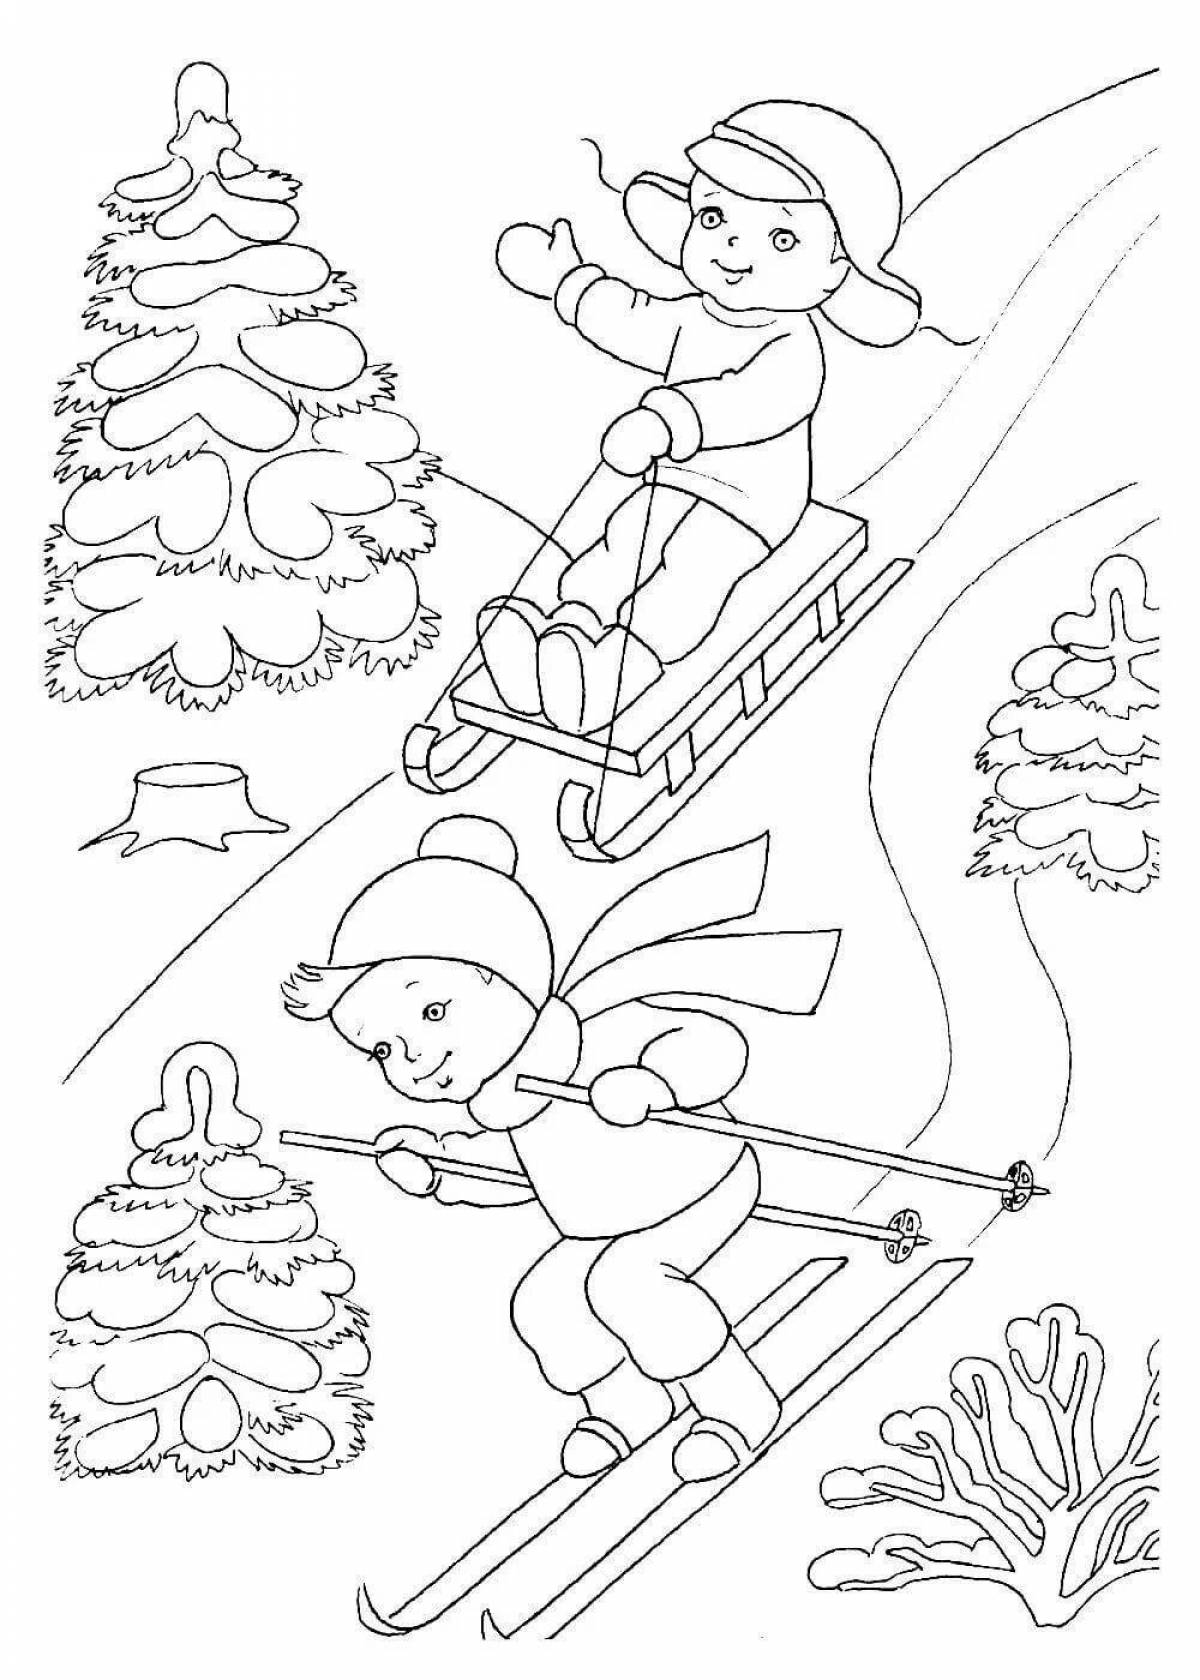 Sparkly winter fun coloring book